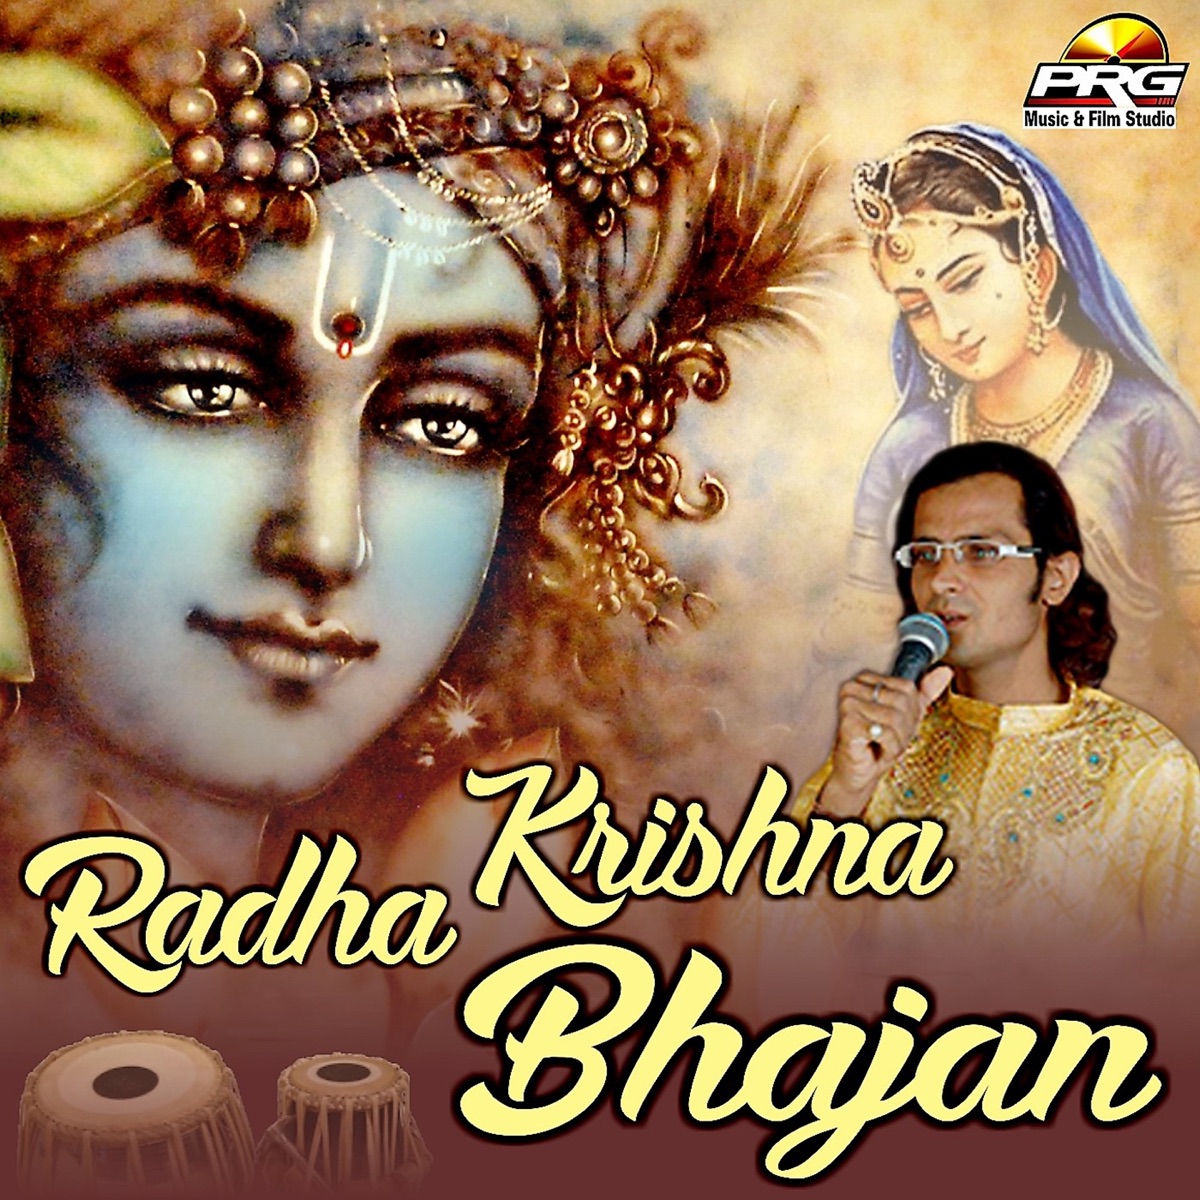 Radha Krishna Bhajan - Album by Rajendra Vyas - Apple Music